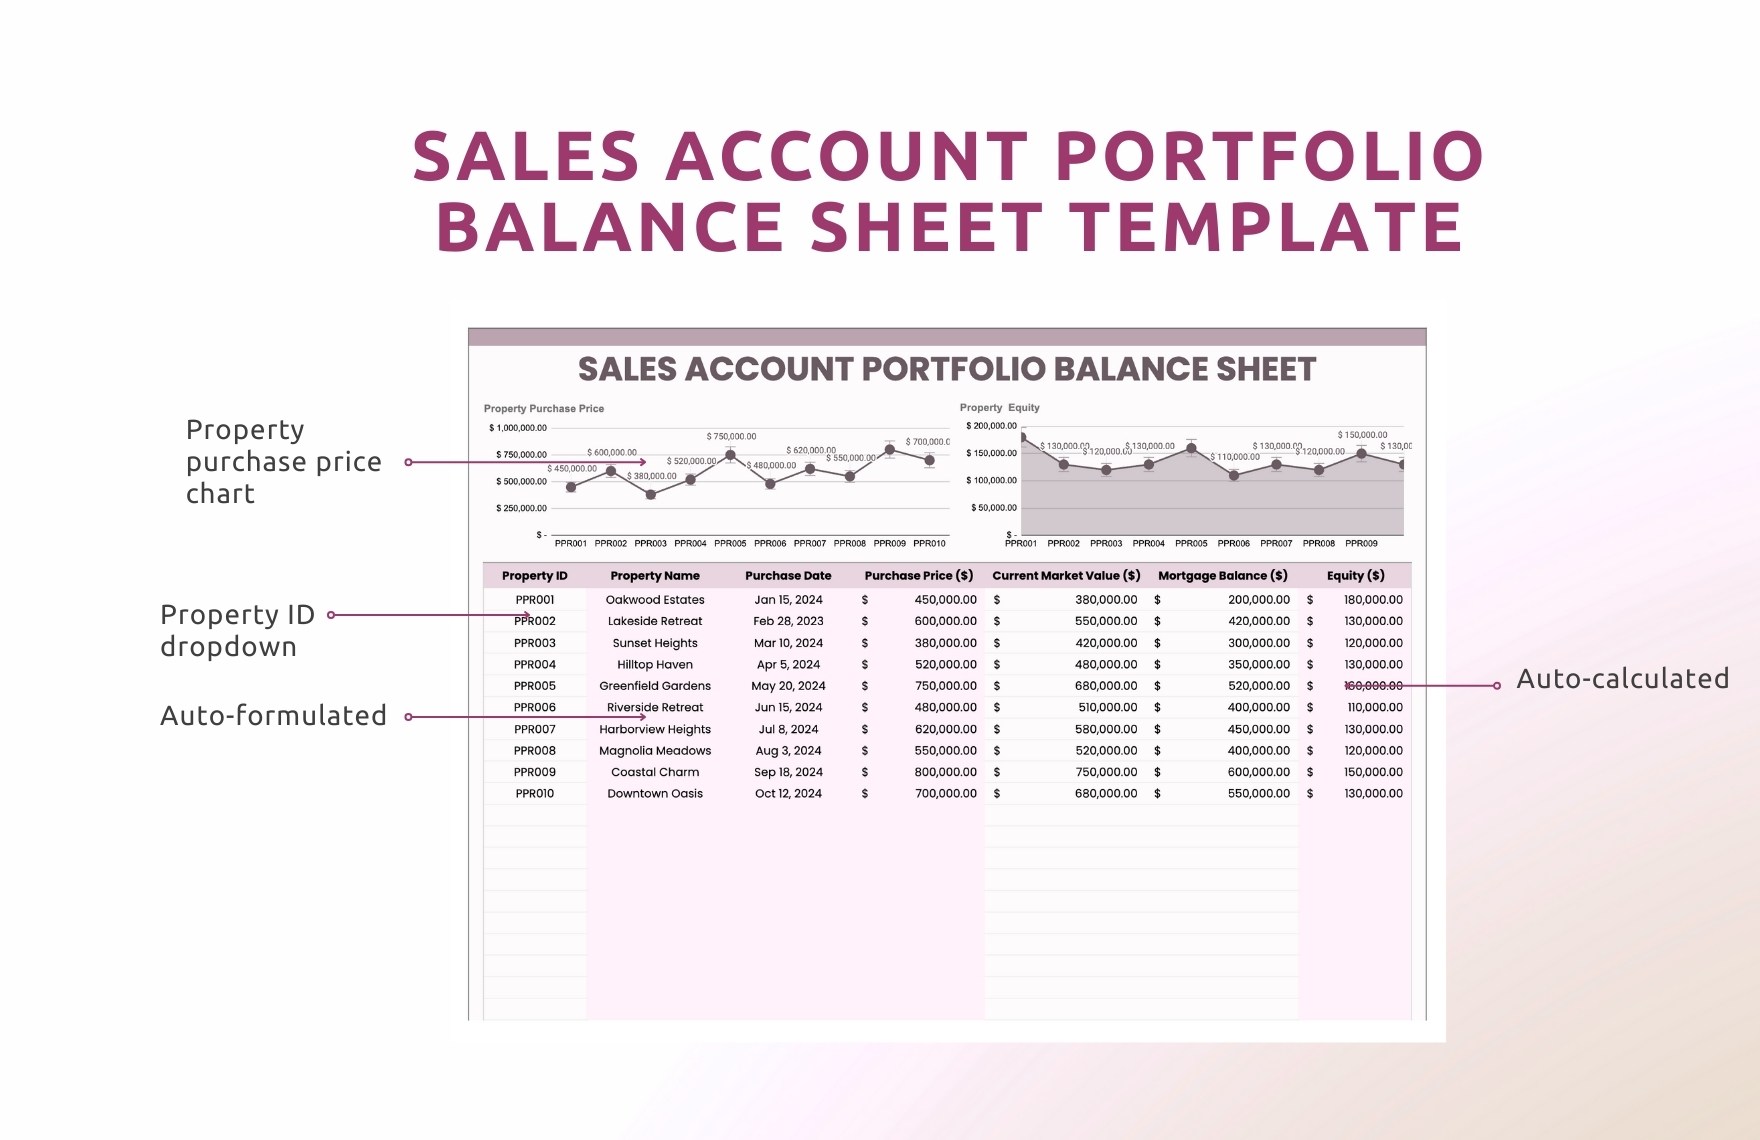 Sales Account Portfolio Balance Sheet Template